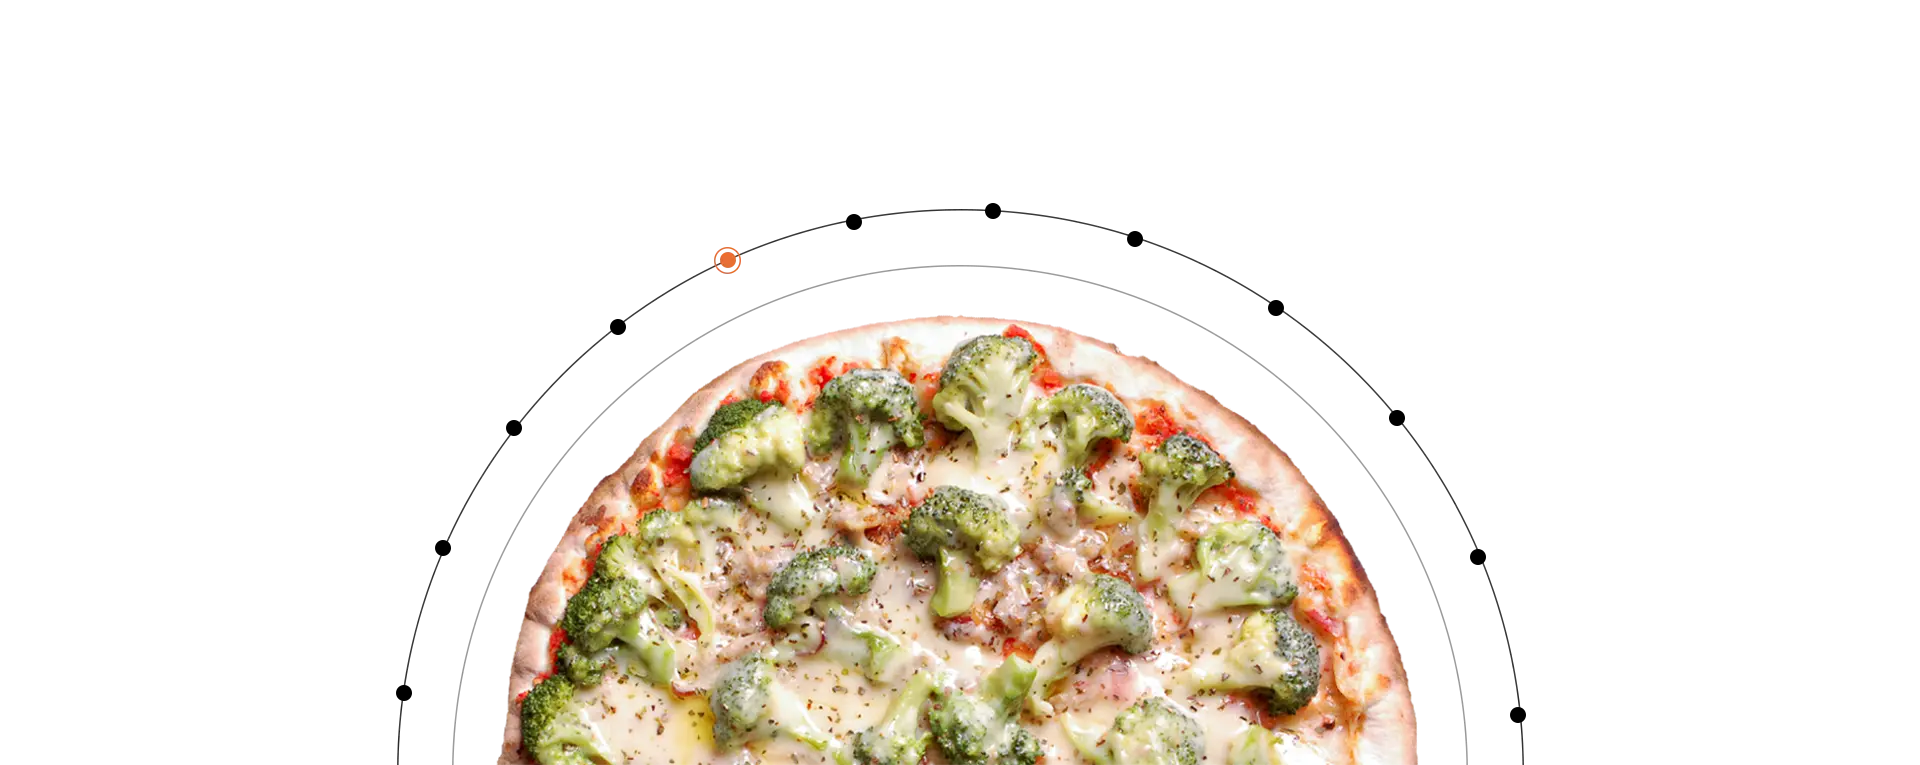 elipse_pizza-brocolis.webp